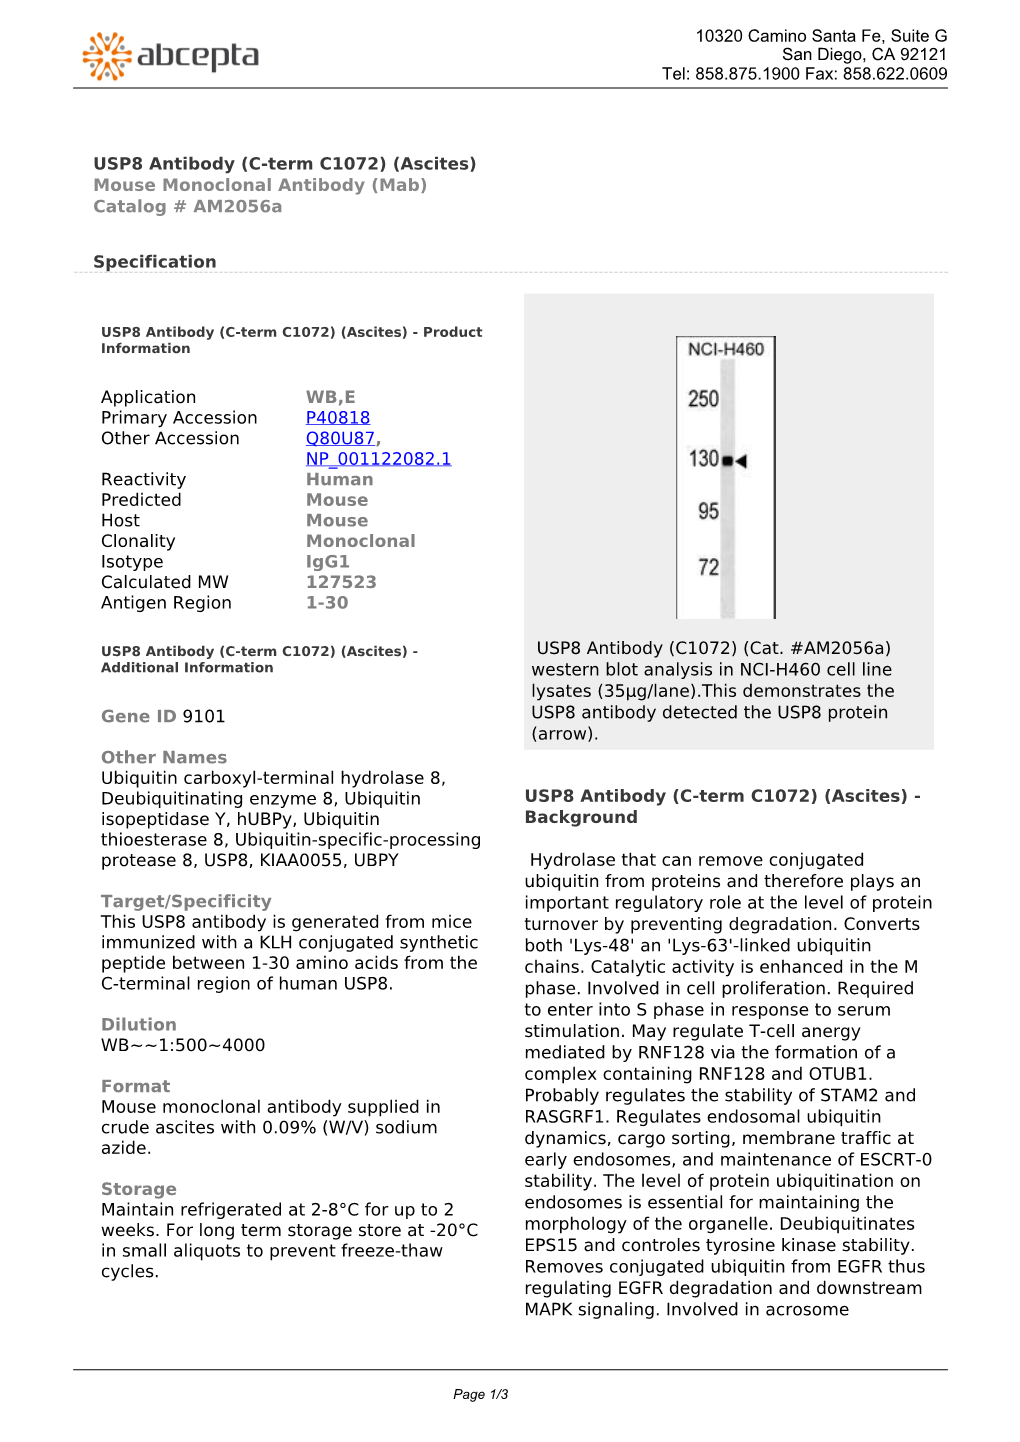 USP8 Antibody (C-Term C1072) (Ascites) Mouse Monoclonal Antibody (Mab) Catalog # Am2056a